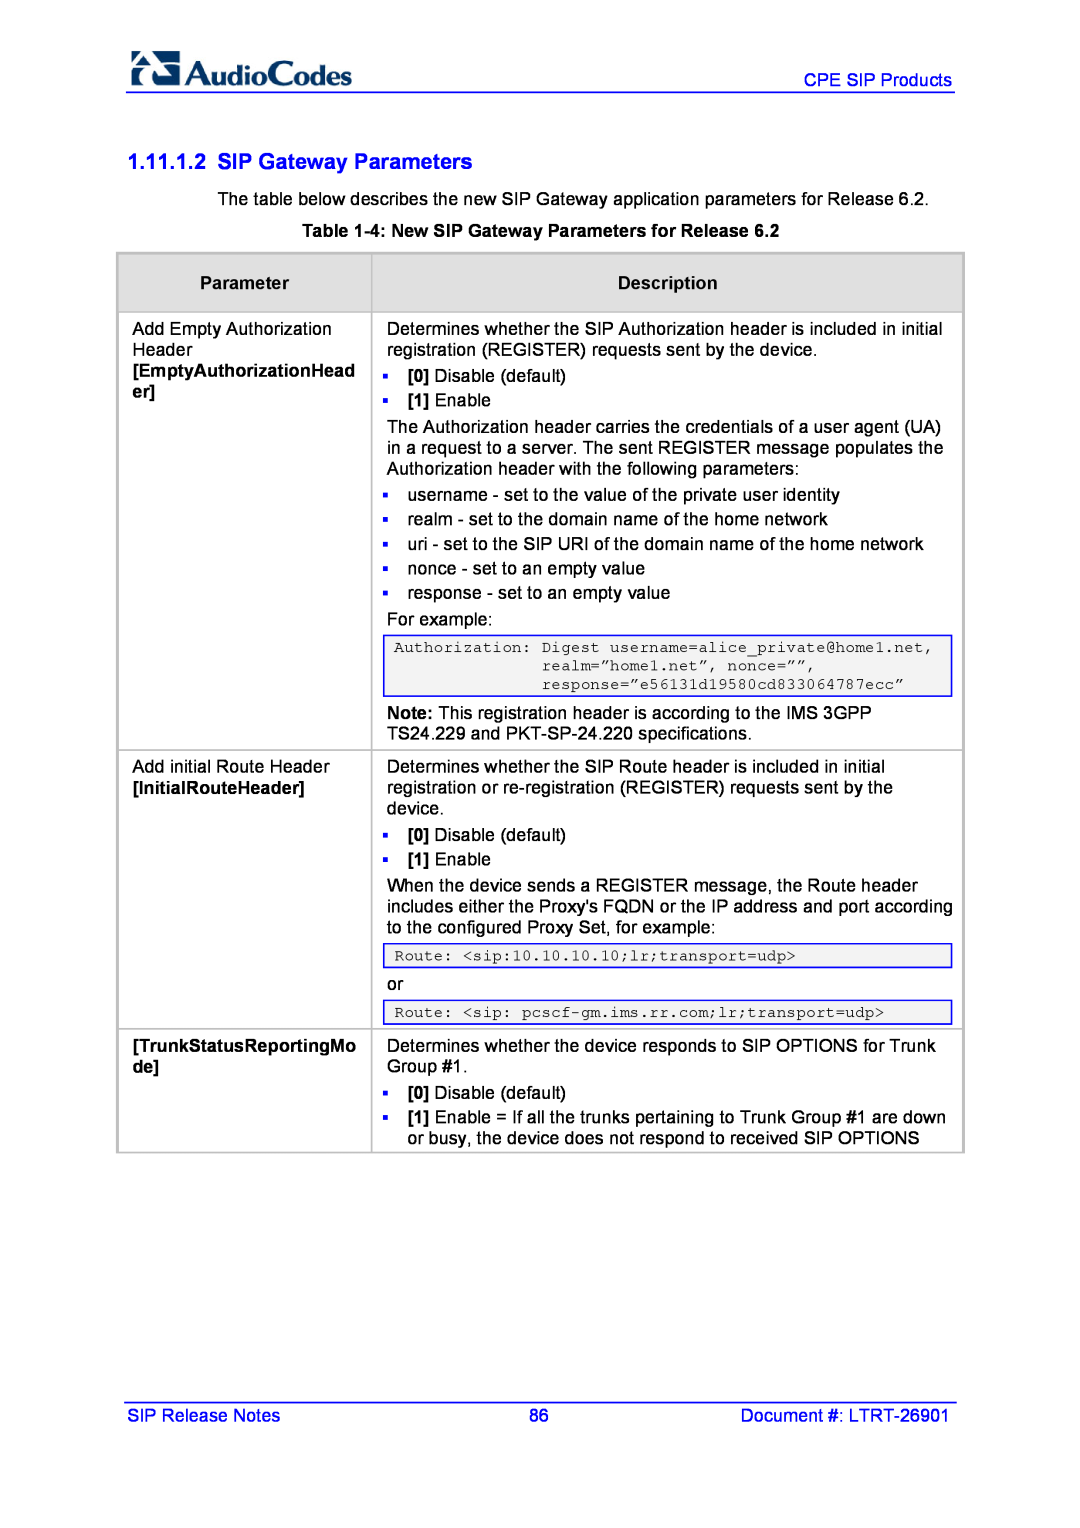 AudioControl VERSION 6.2 manual 4 New SIP Gateway Parameters for Release, Description, EmptyAuthorizationHead 